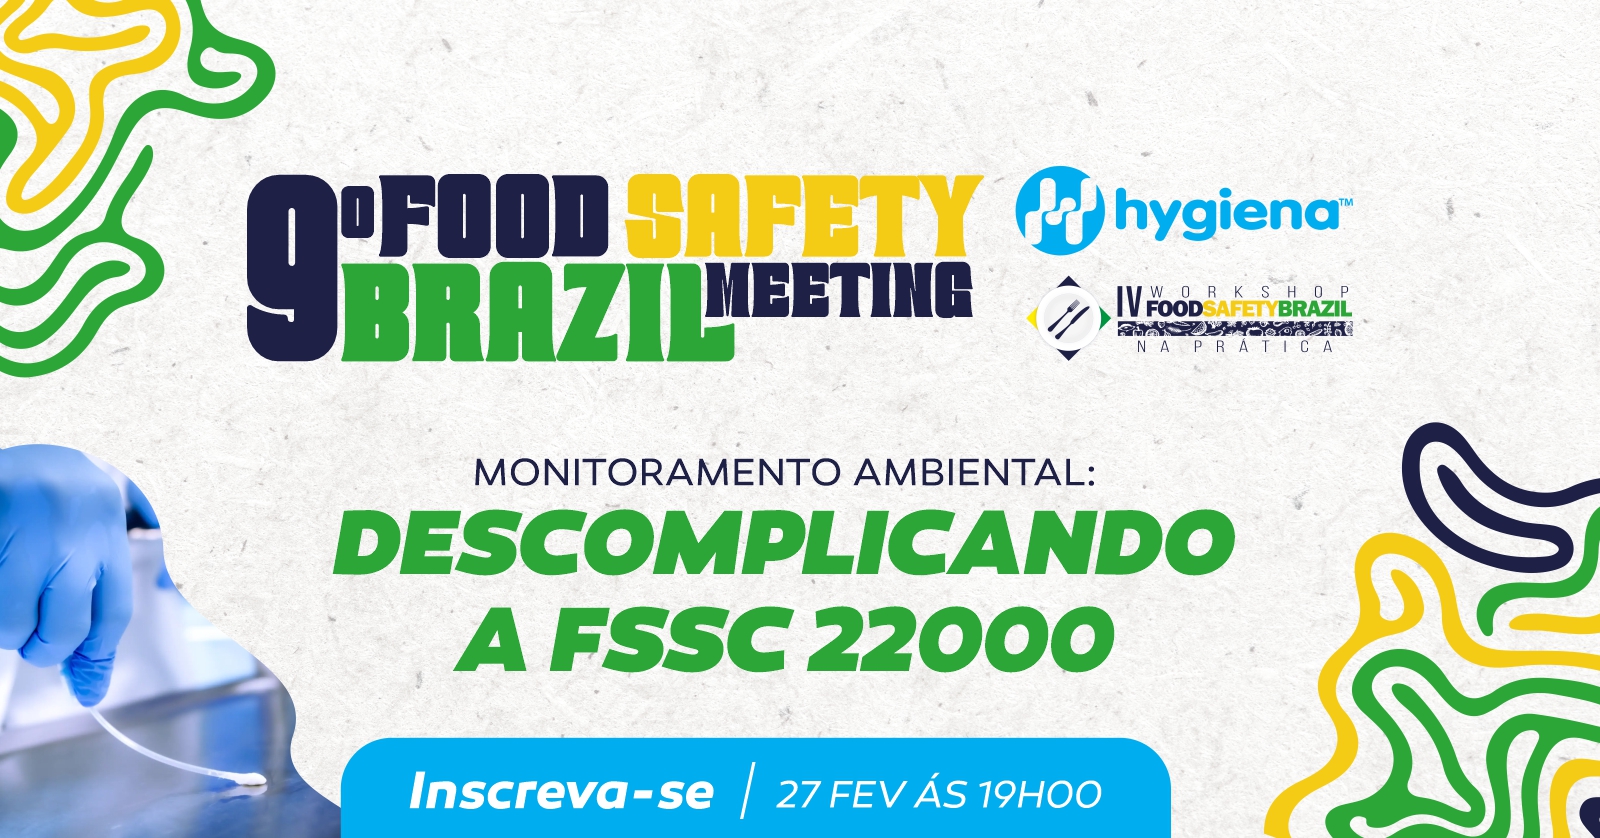 LGPD Política de Privacidade - Food Safety Brazil